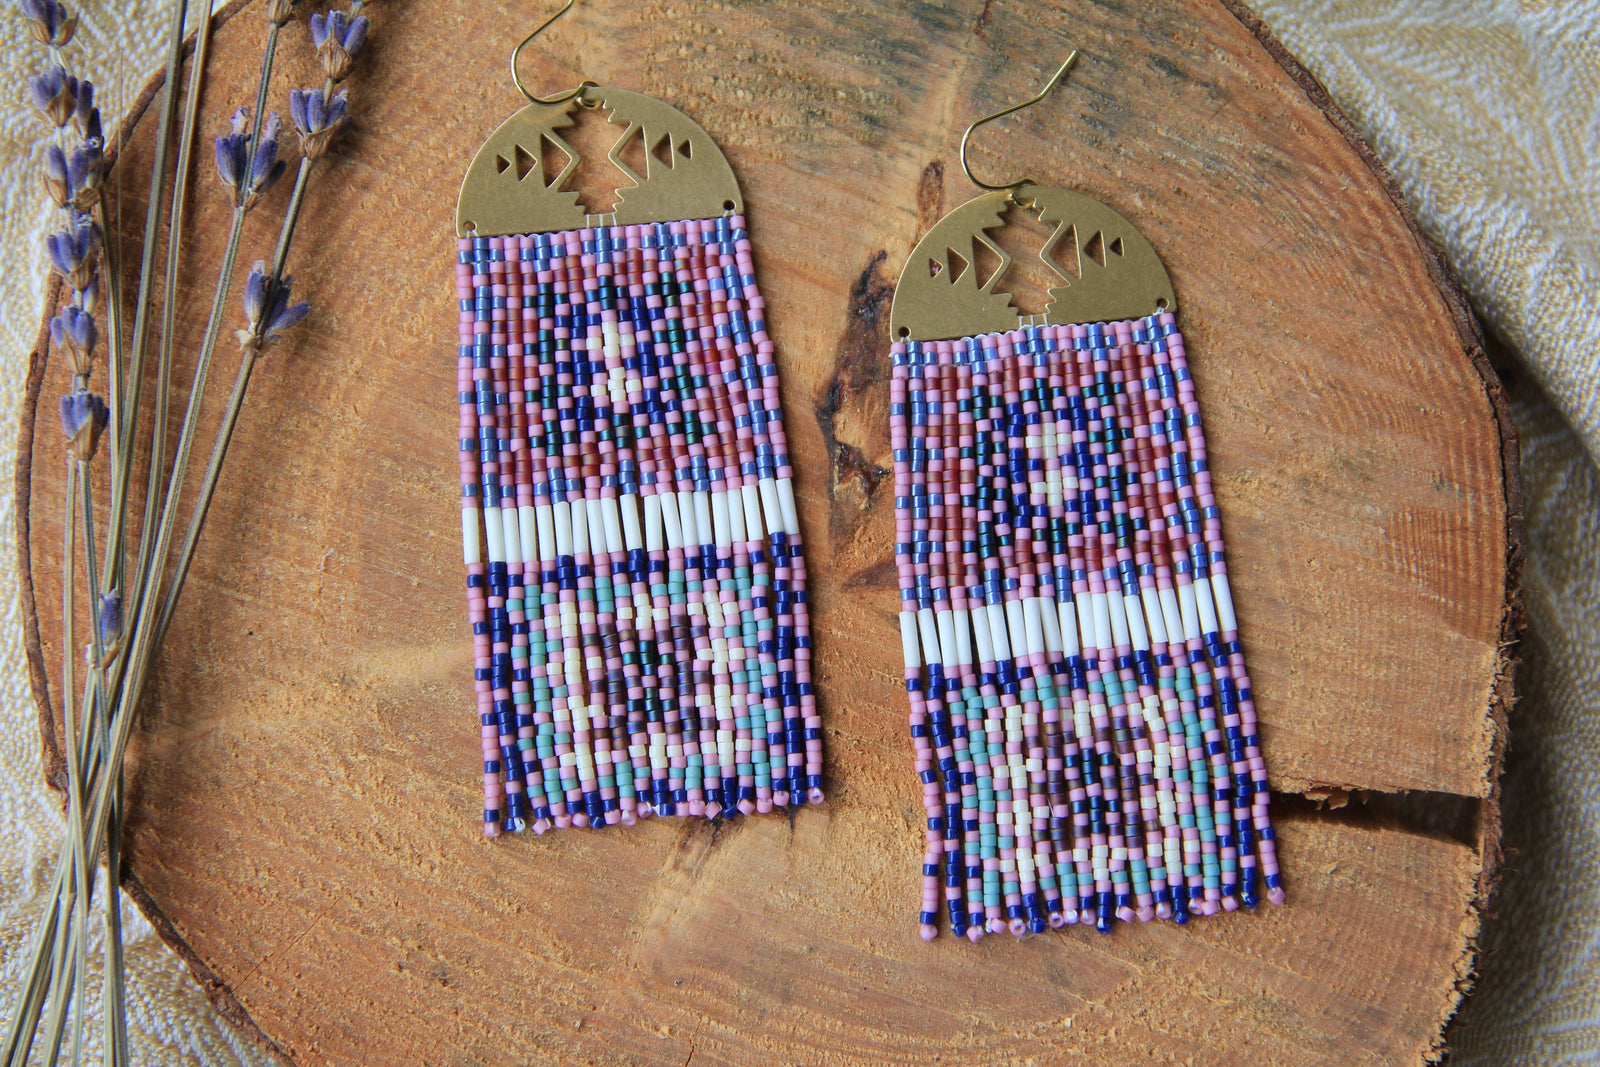 Birch American Indian Bead Loom Kit